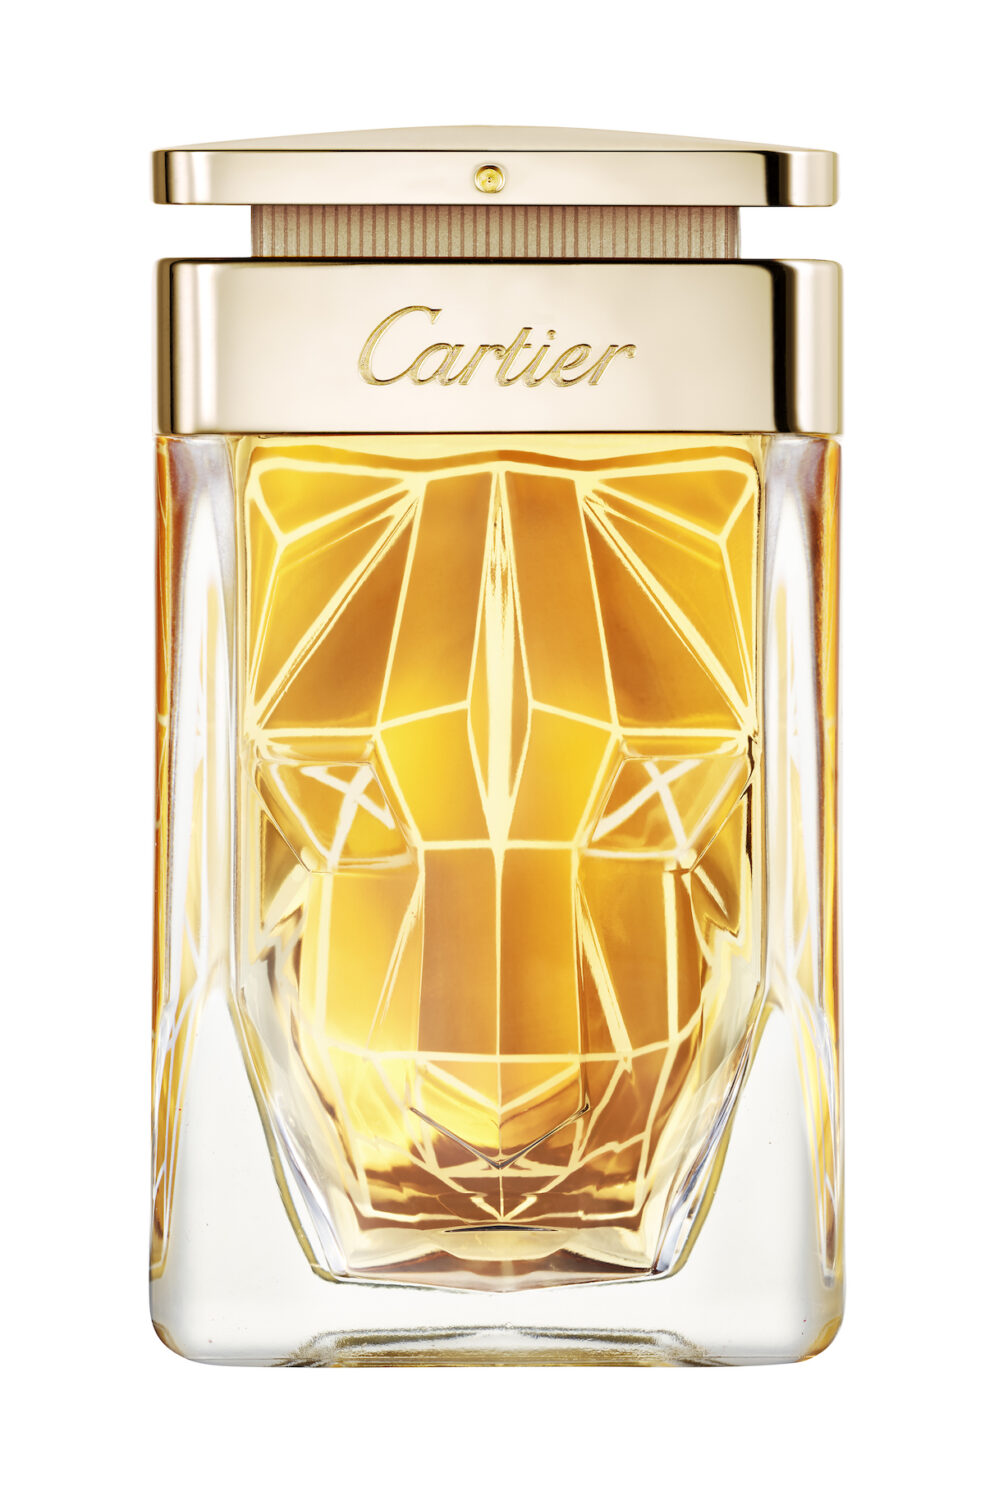 Cartier Launch a Limited Edition La Panthère Perfume - MOJEH